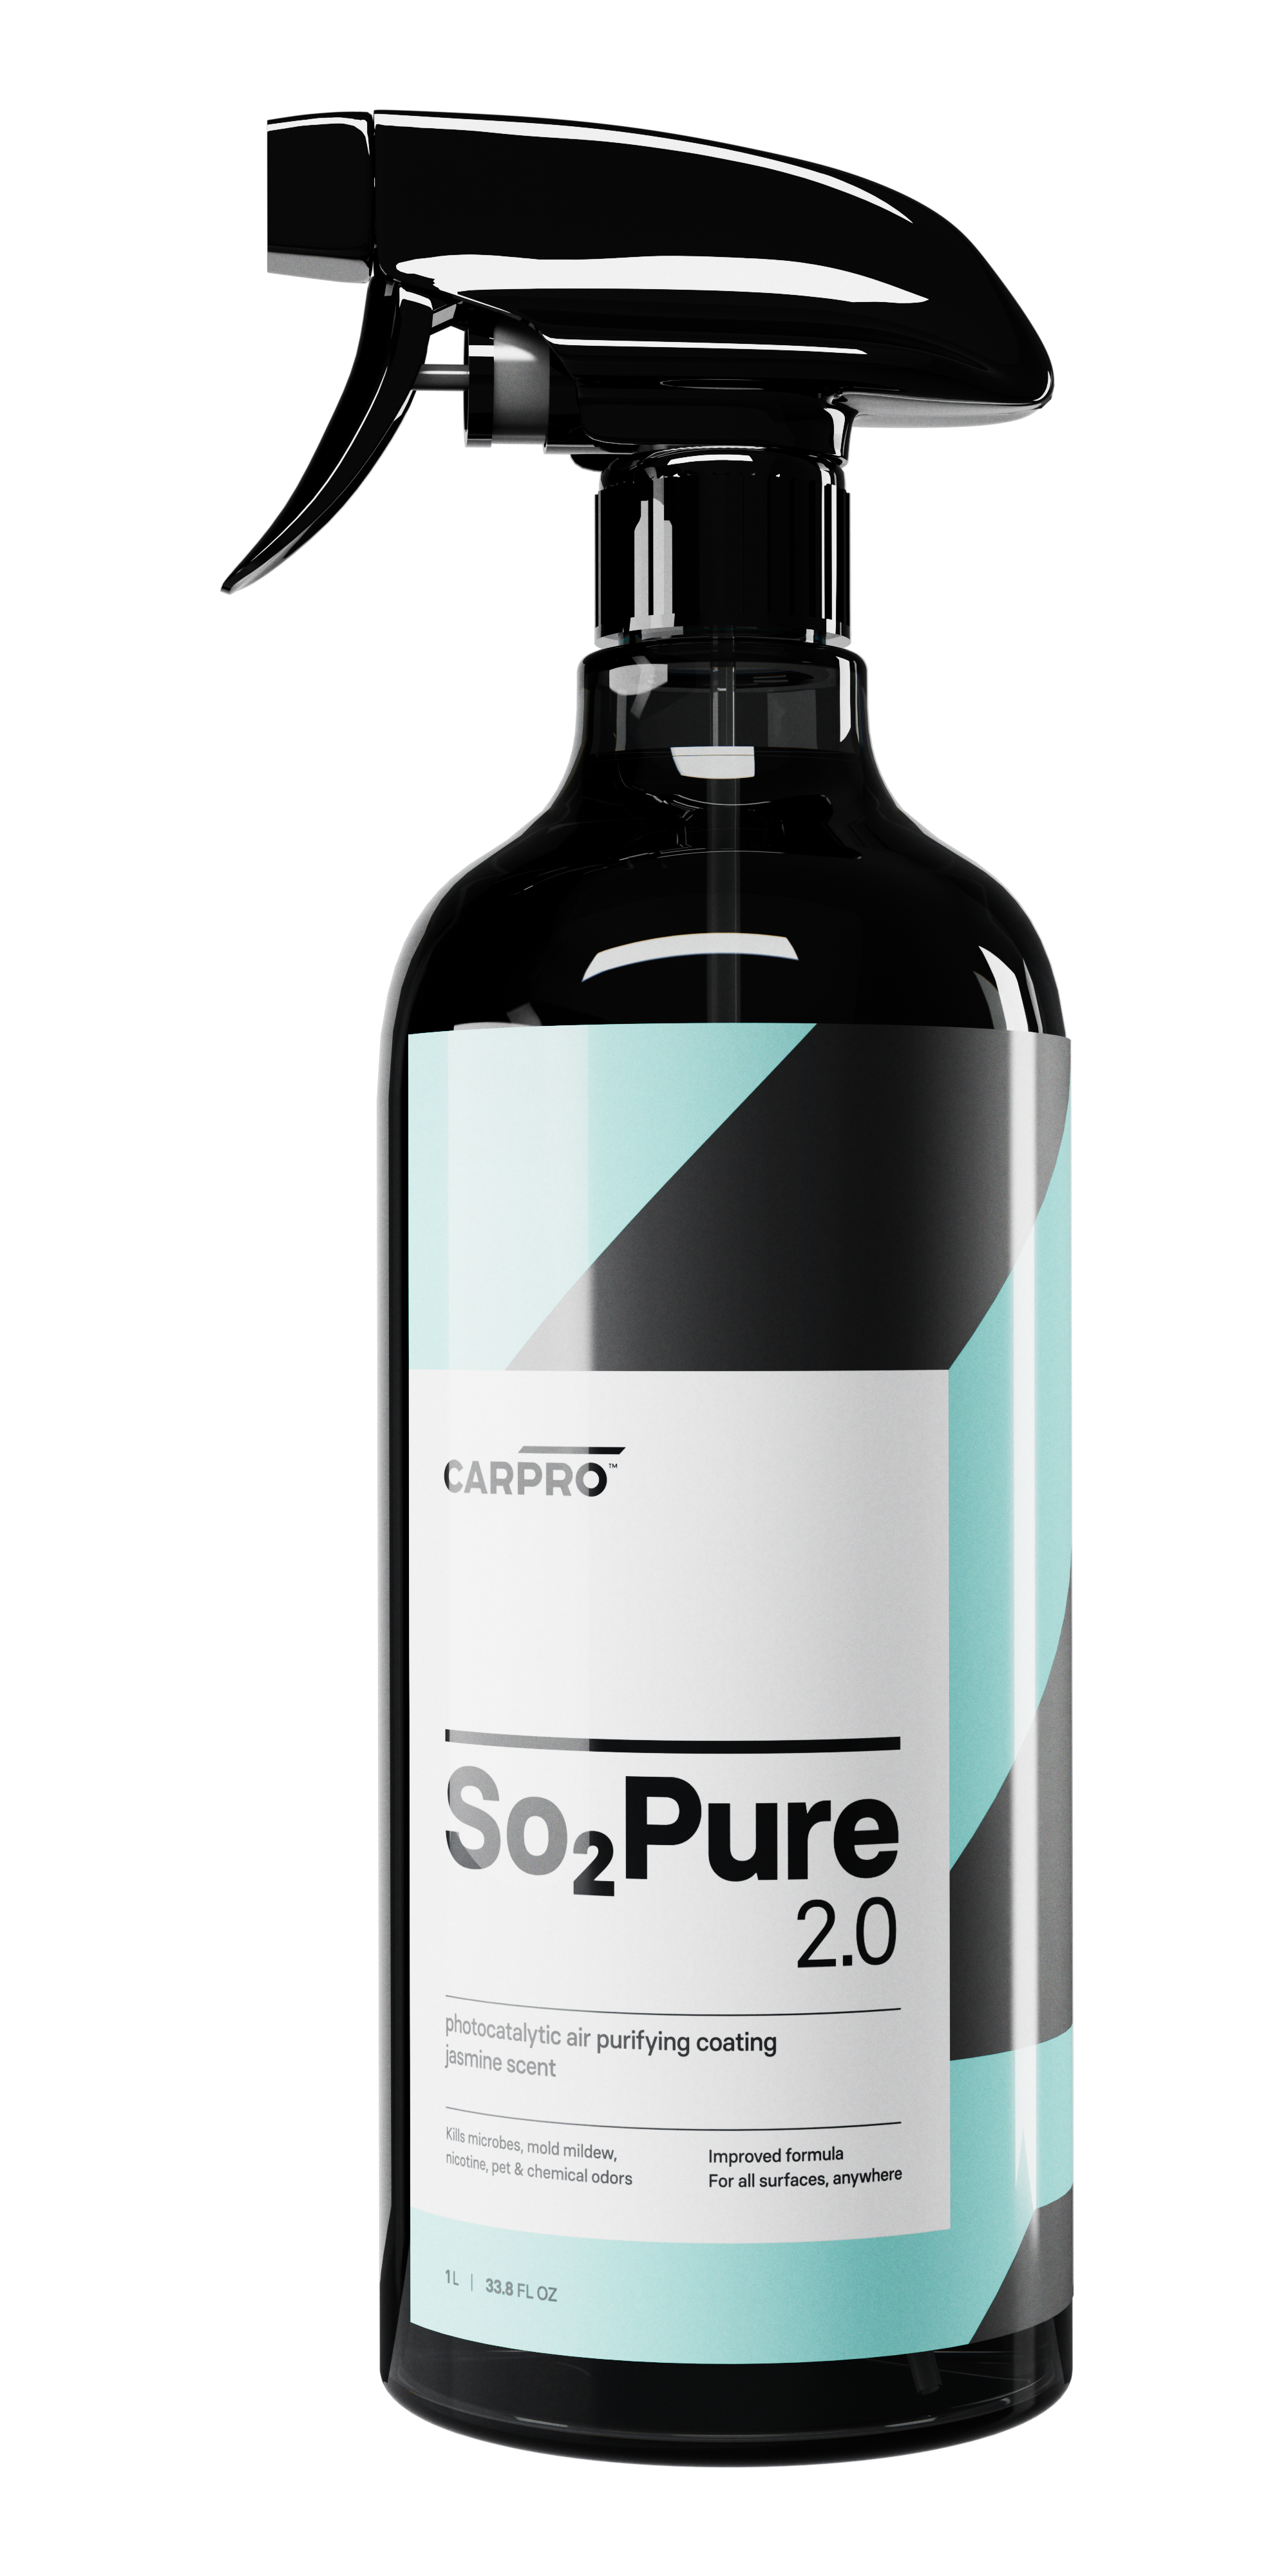 CARPRO - So²Pure 2.0 (Odor neutralizer)